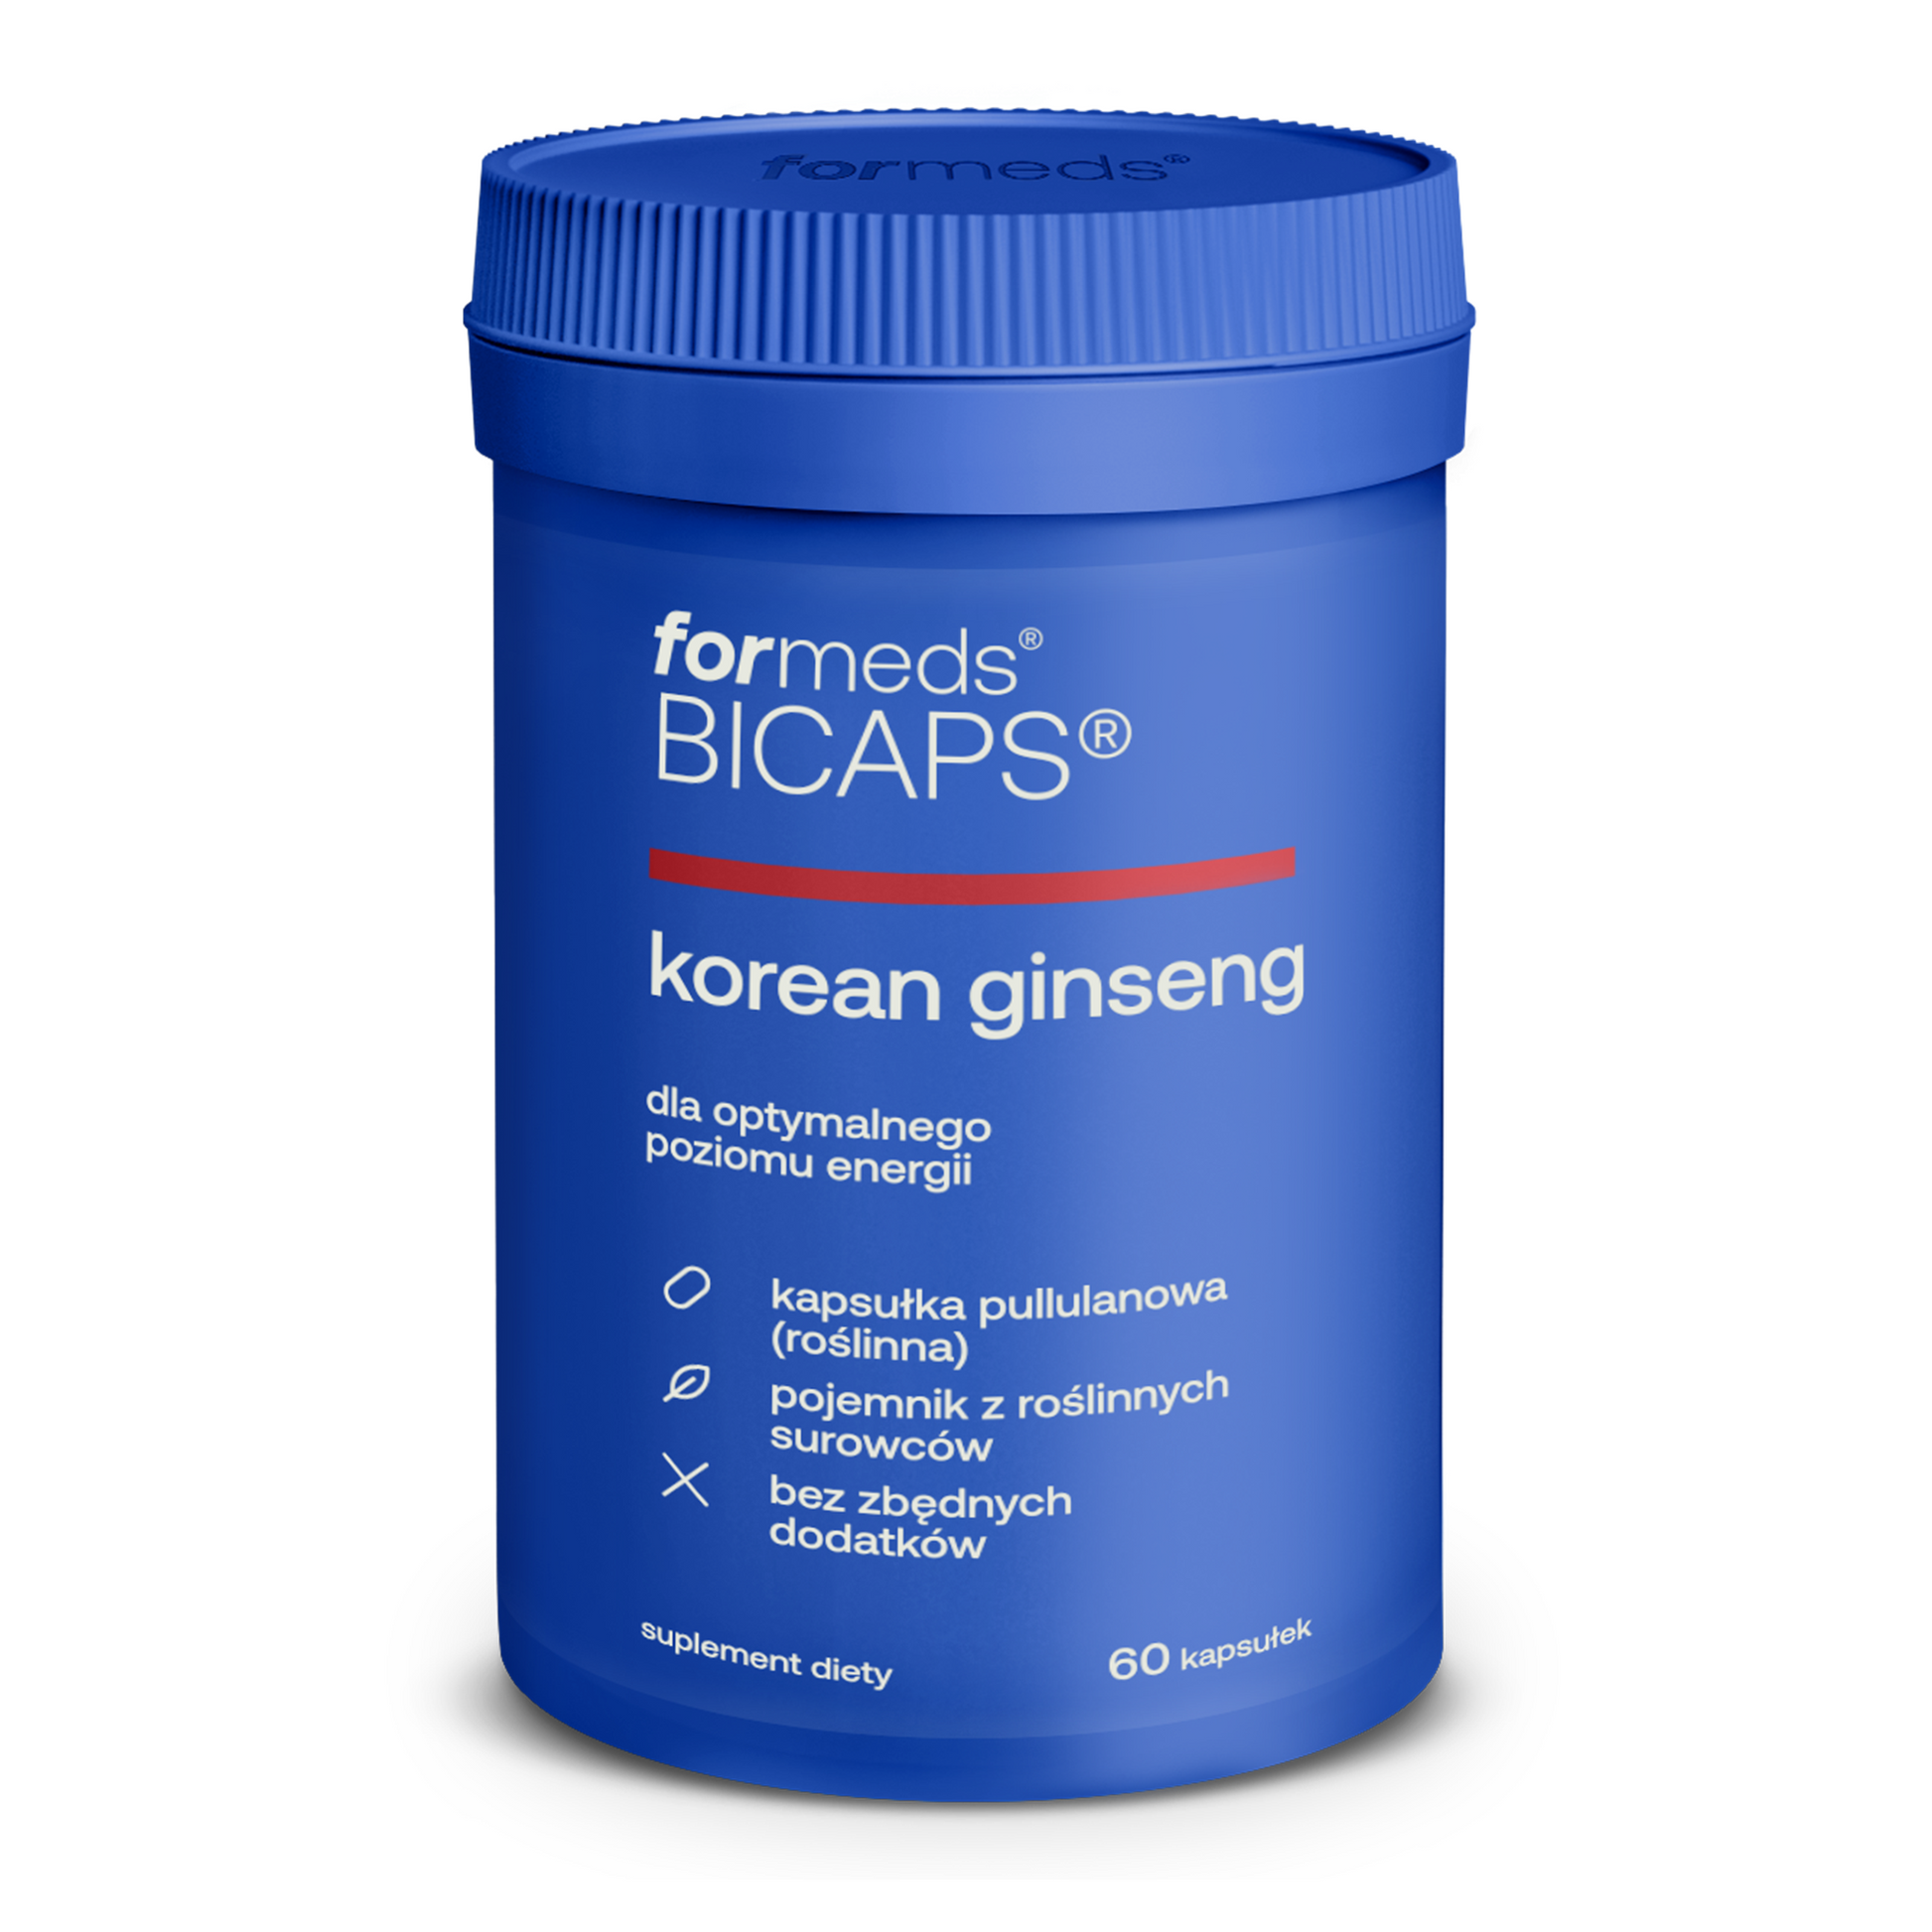 BICAPS Korean ginseng - żeń szeń koreański tabletki, kapsułki